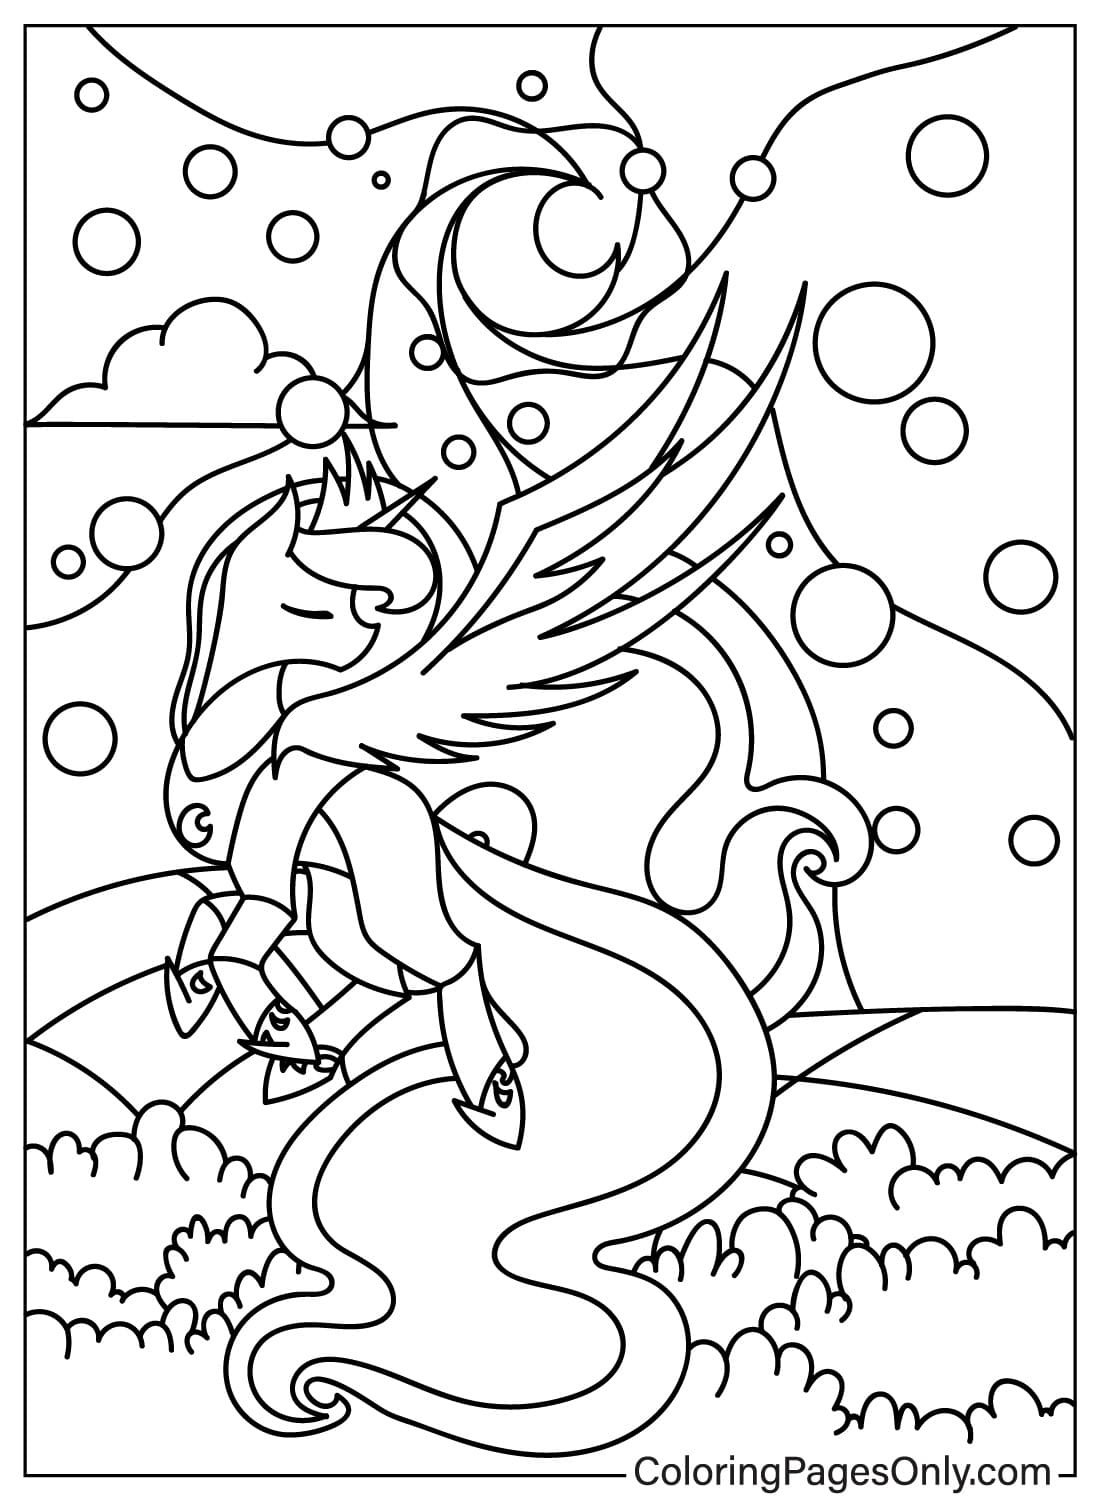 Princess Luna Coloring Page to Print from Princess Luna